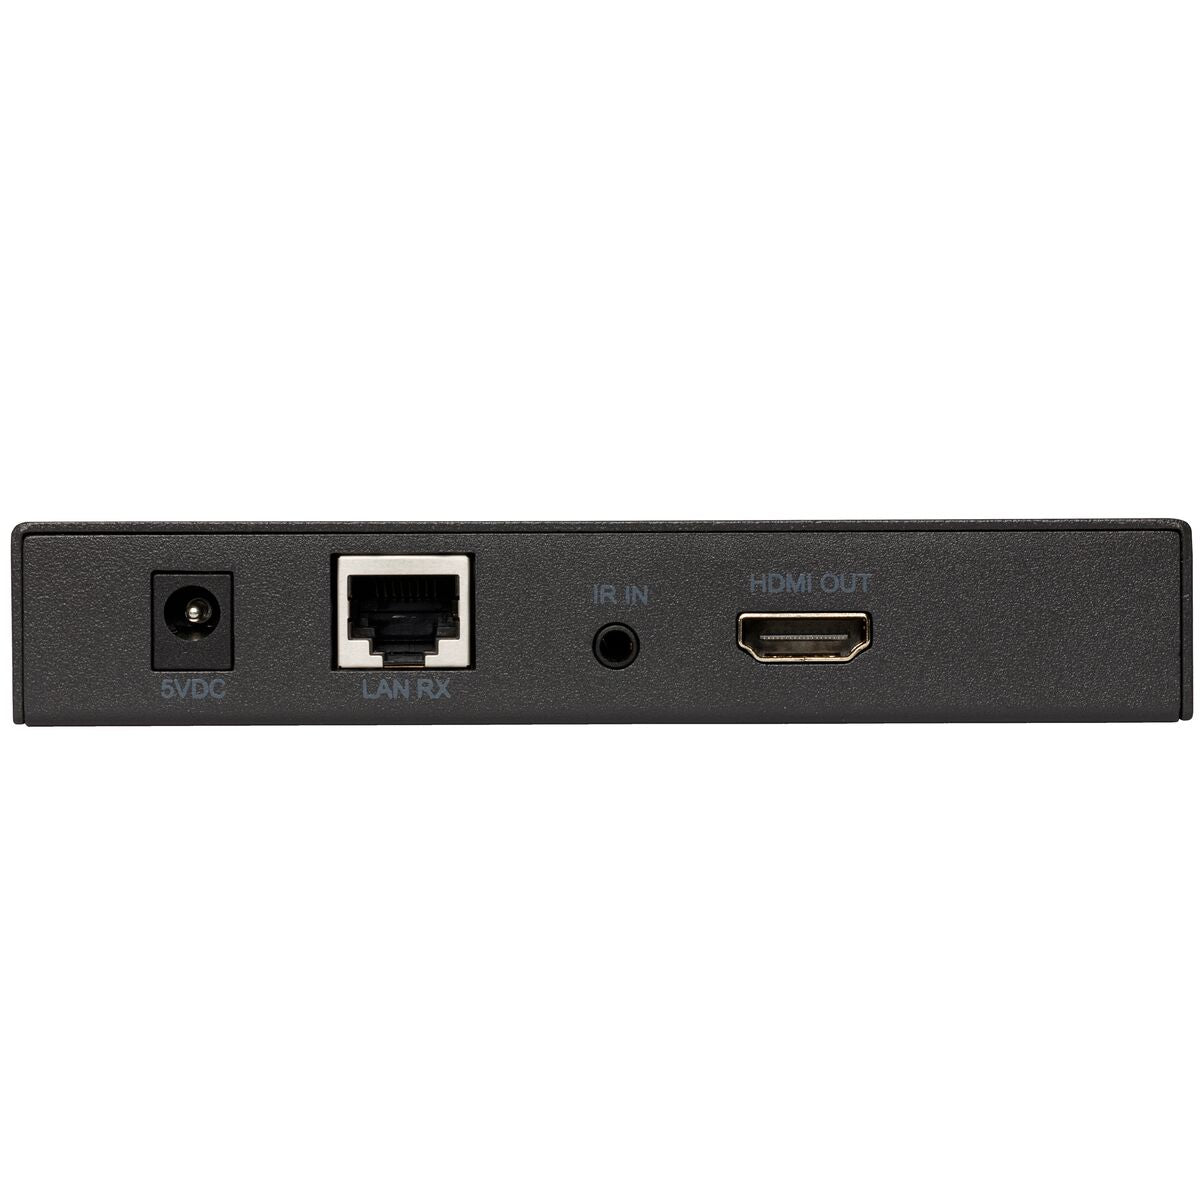 MegaView 91 Voordeelbundel II - HDMI extender Ethernet + 2 extra HDMI receivers - Back View Image HDMI Receiver | Marmitek